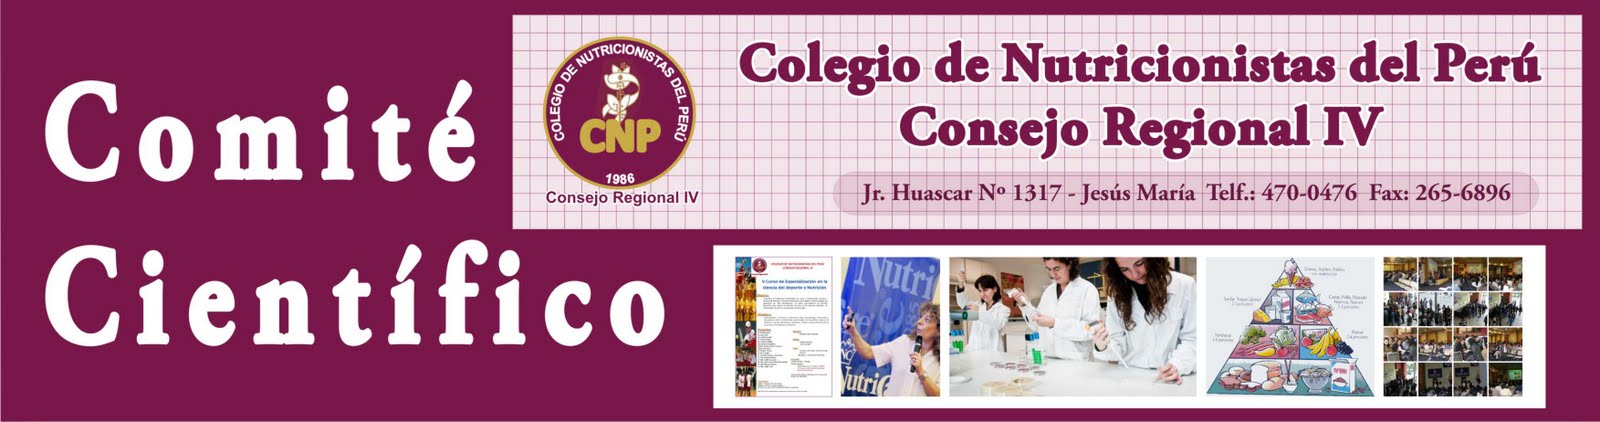 CONSEJO REGIONAL IV - CNP - COMITE CIENTIFICO